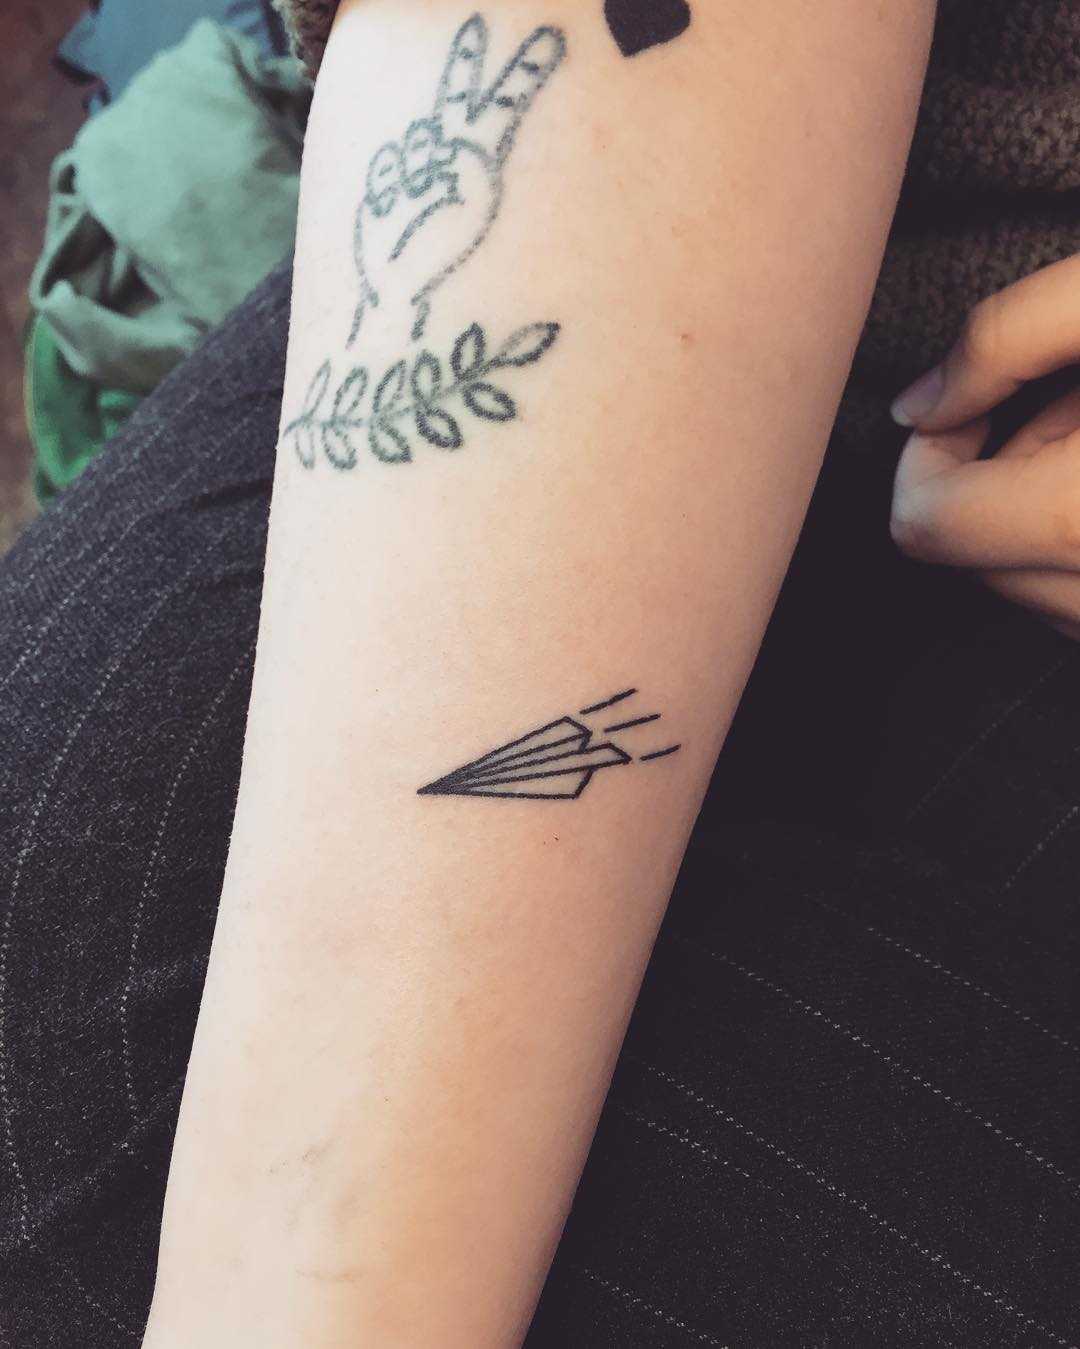 Little paper plane tattoo by Kirk Budden